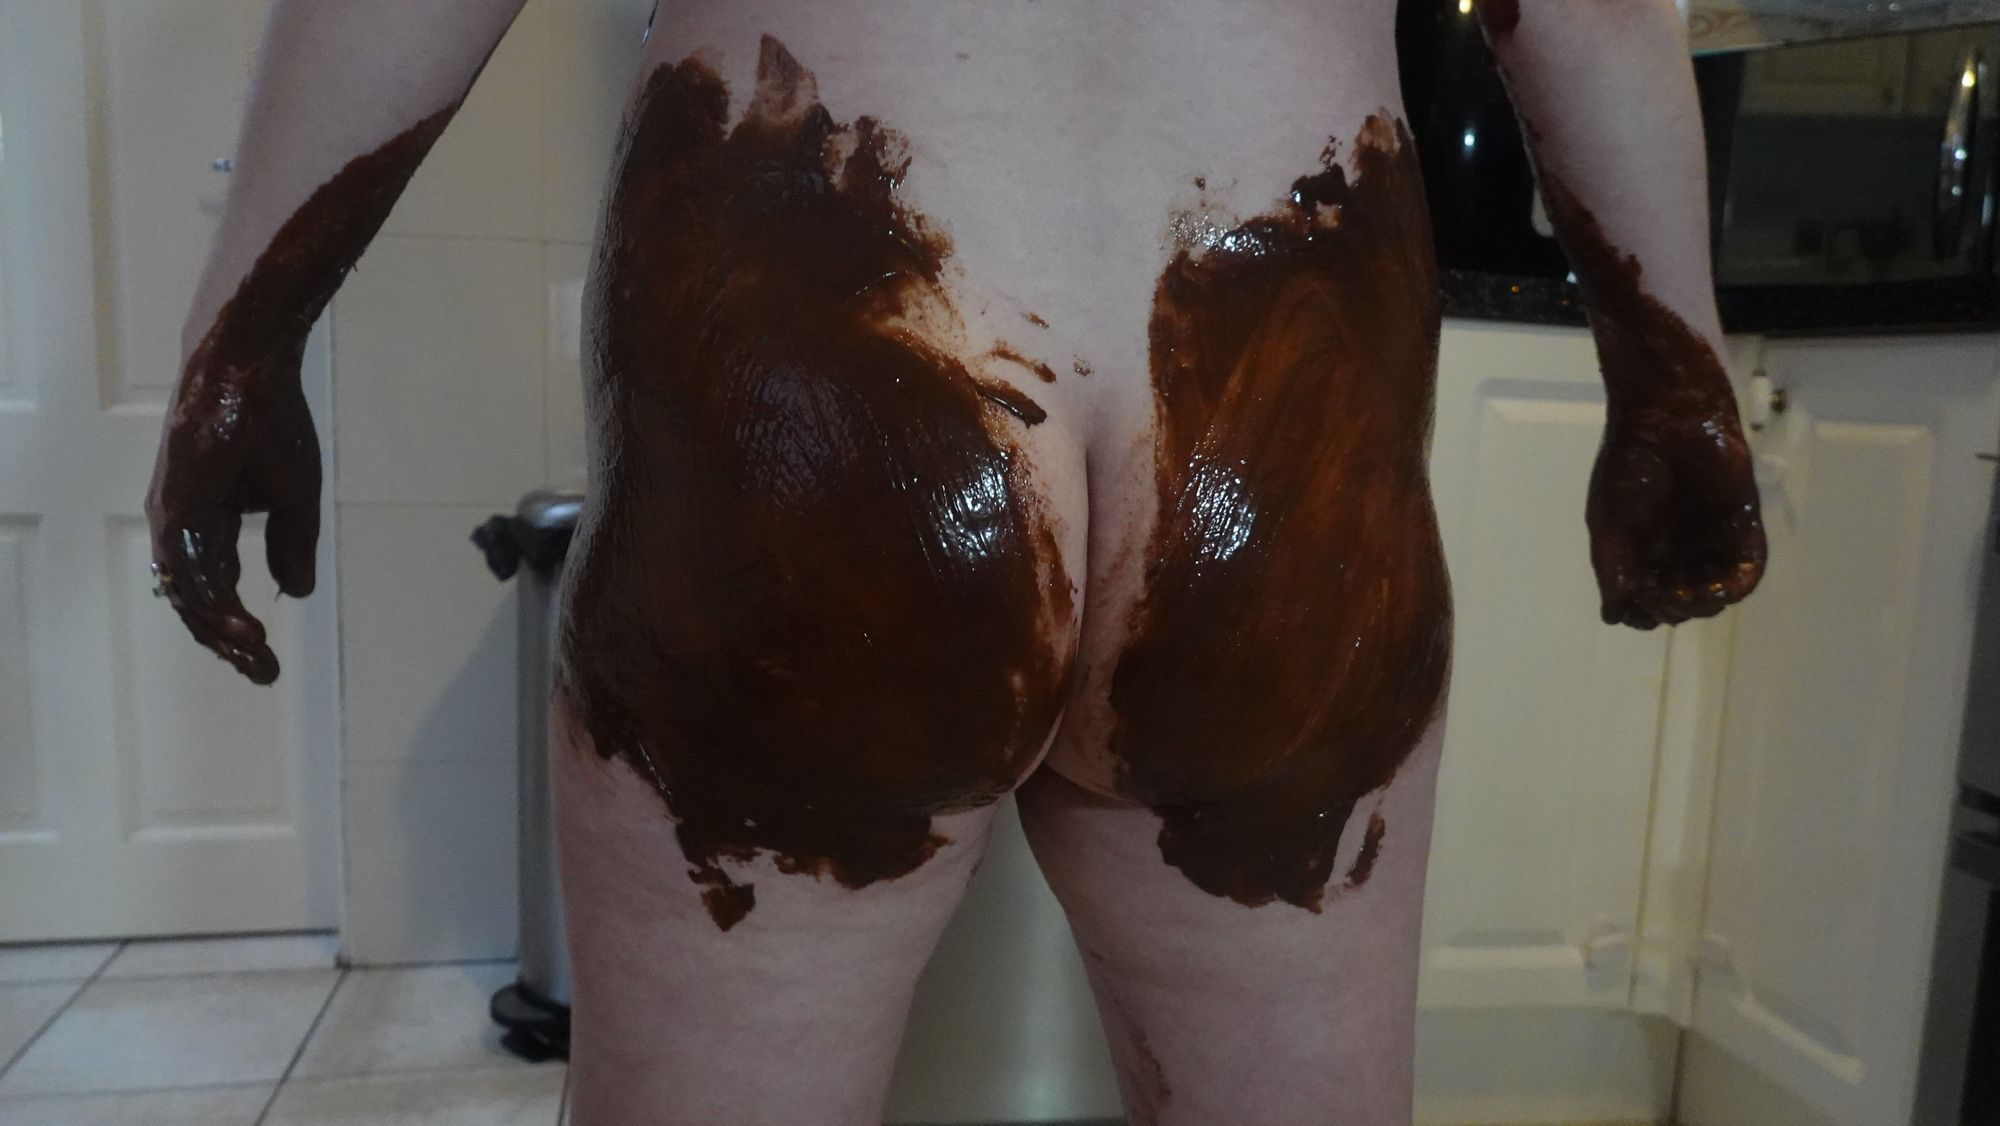 chocolate sauce messy fun #31